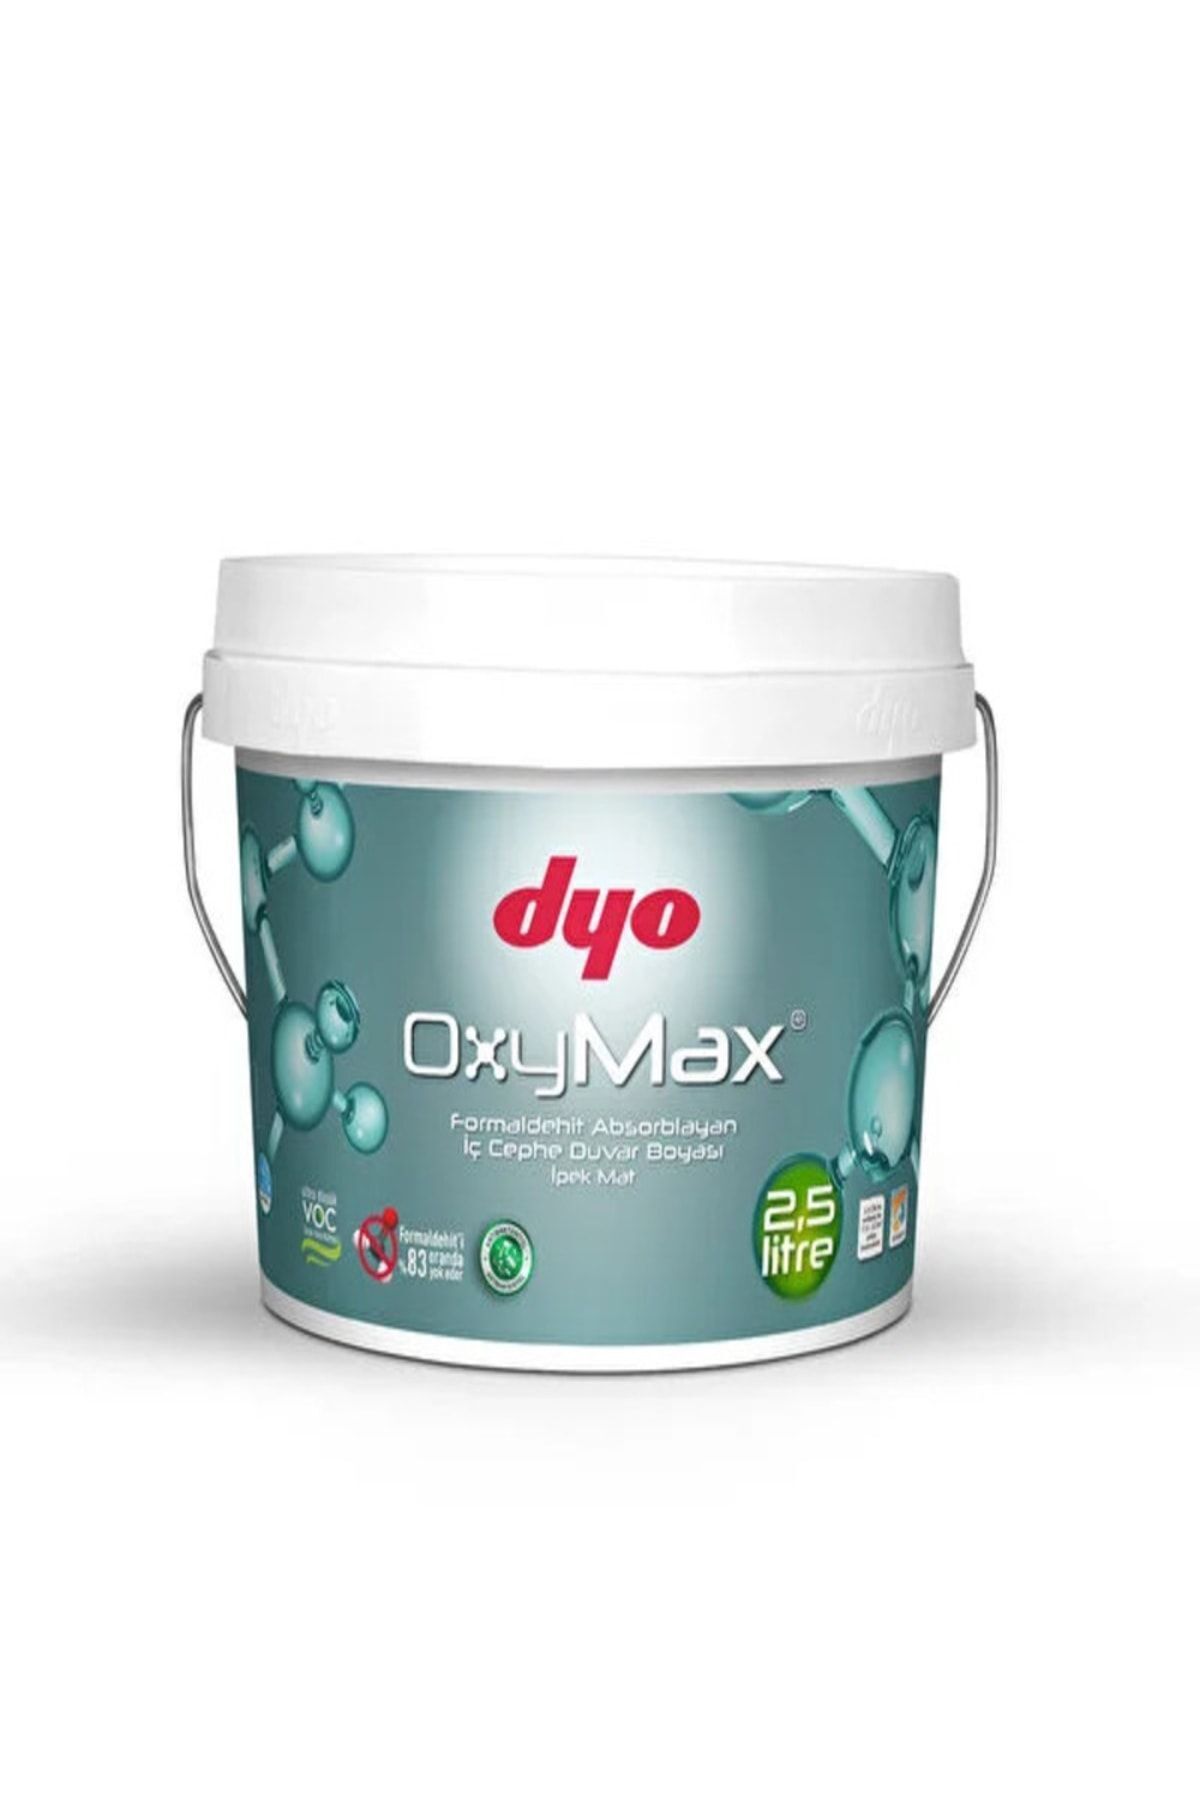 Dyo Oxymax Beyaz Ipek Mat Iç Cephe 2,5 Litre